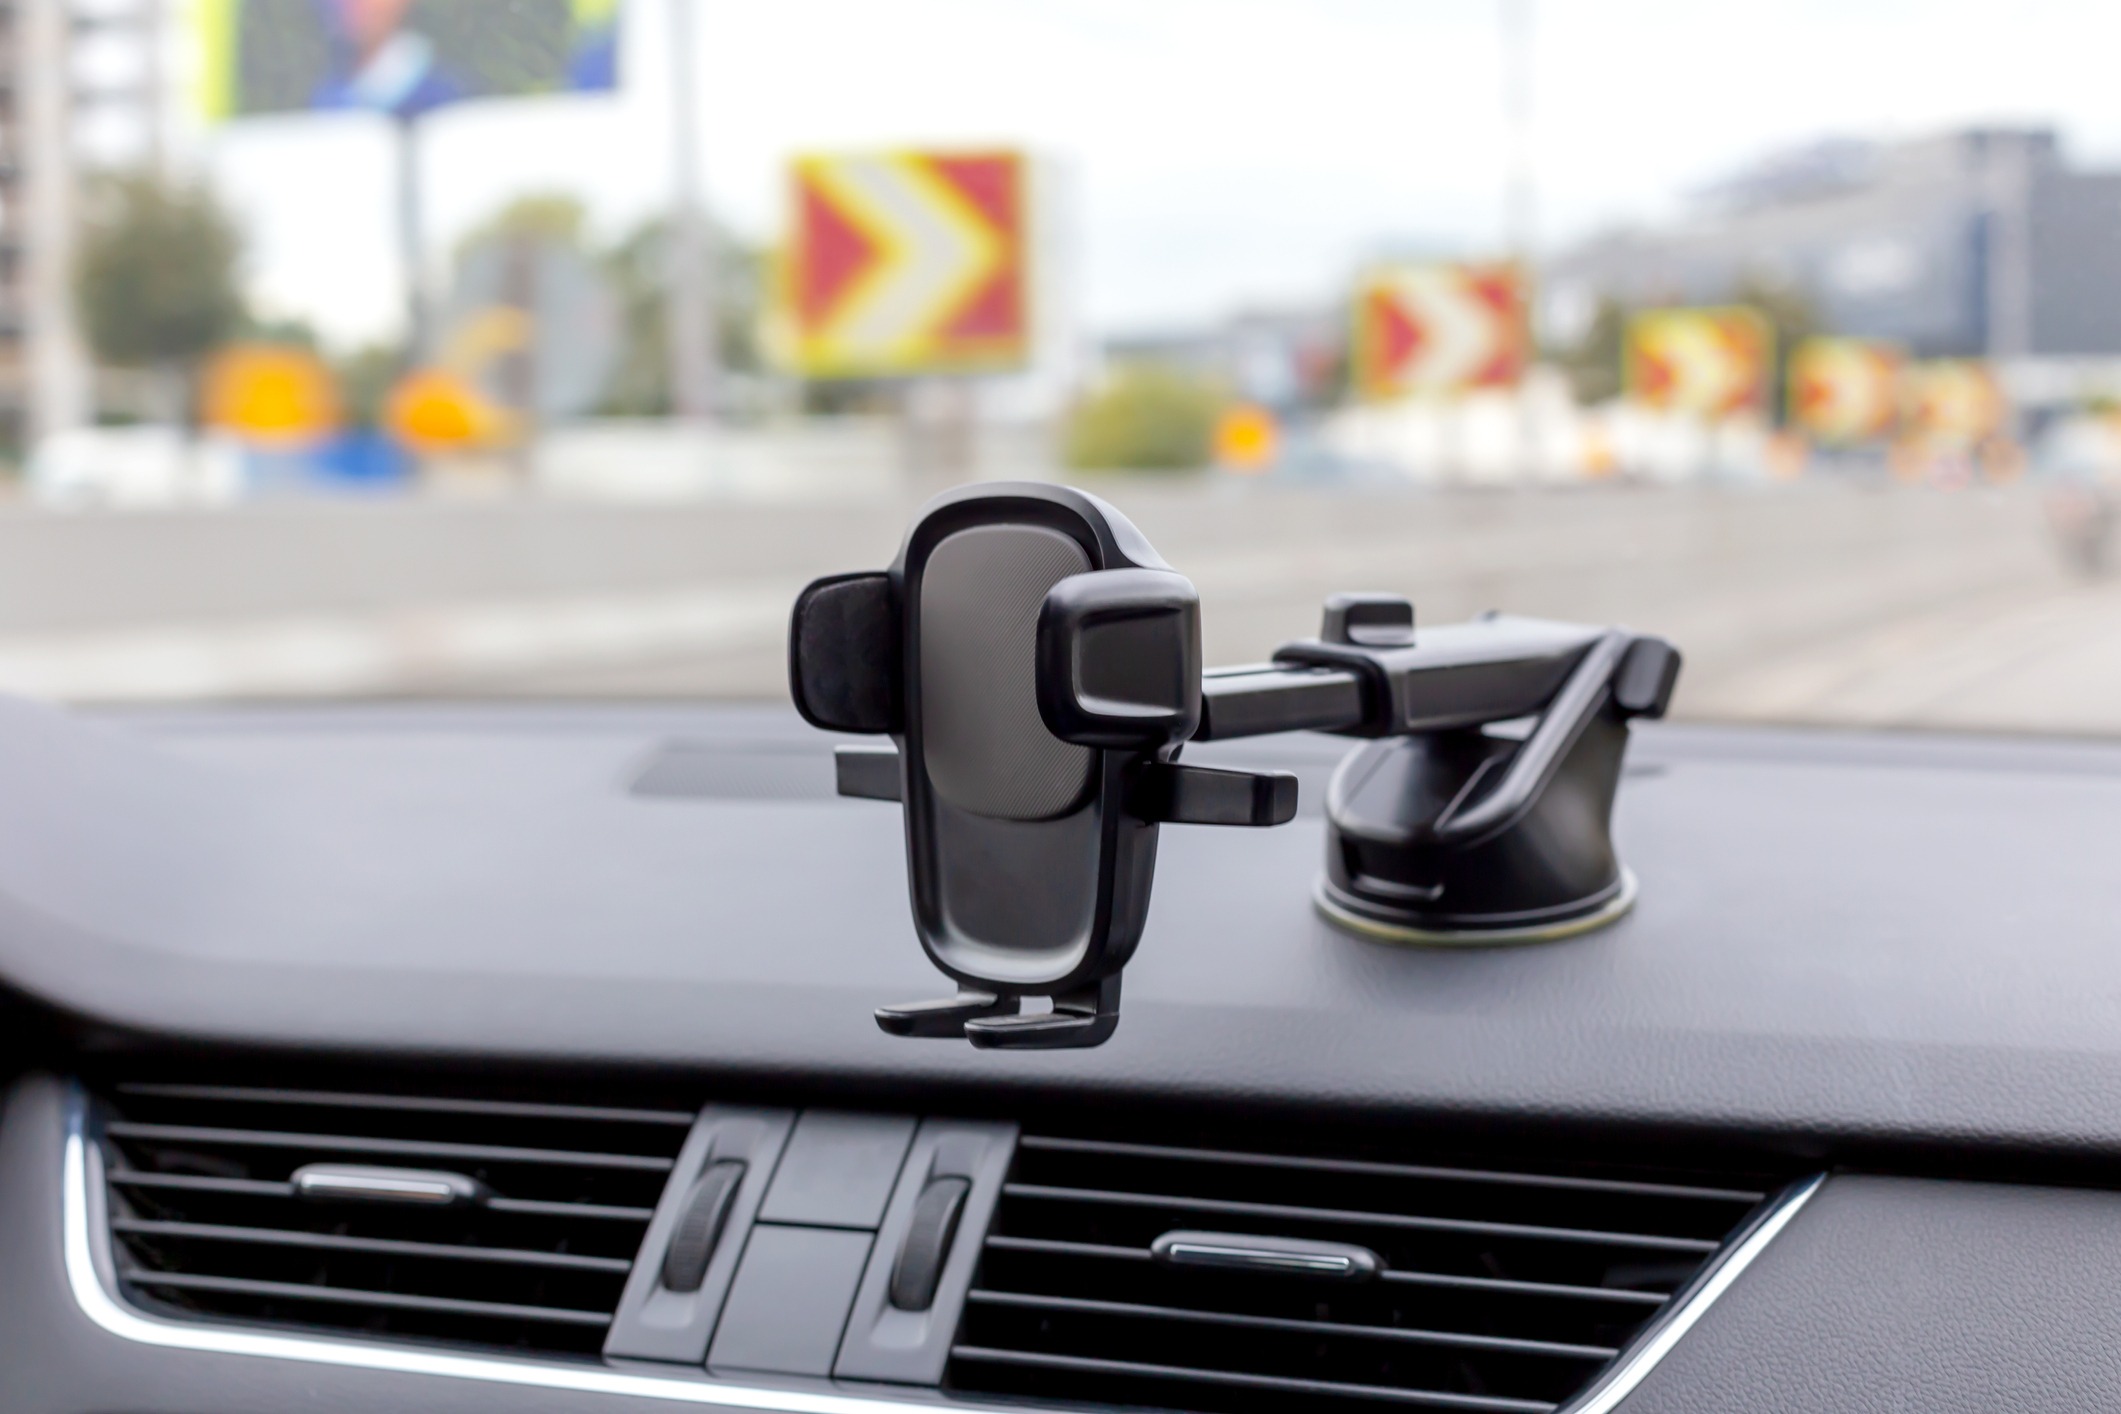 A-car-phone-mount-on-the-car-dashboard